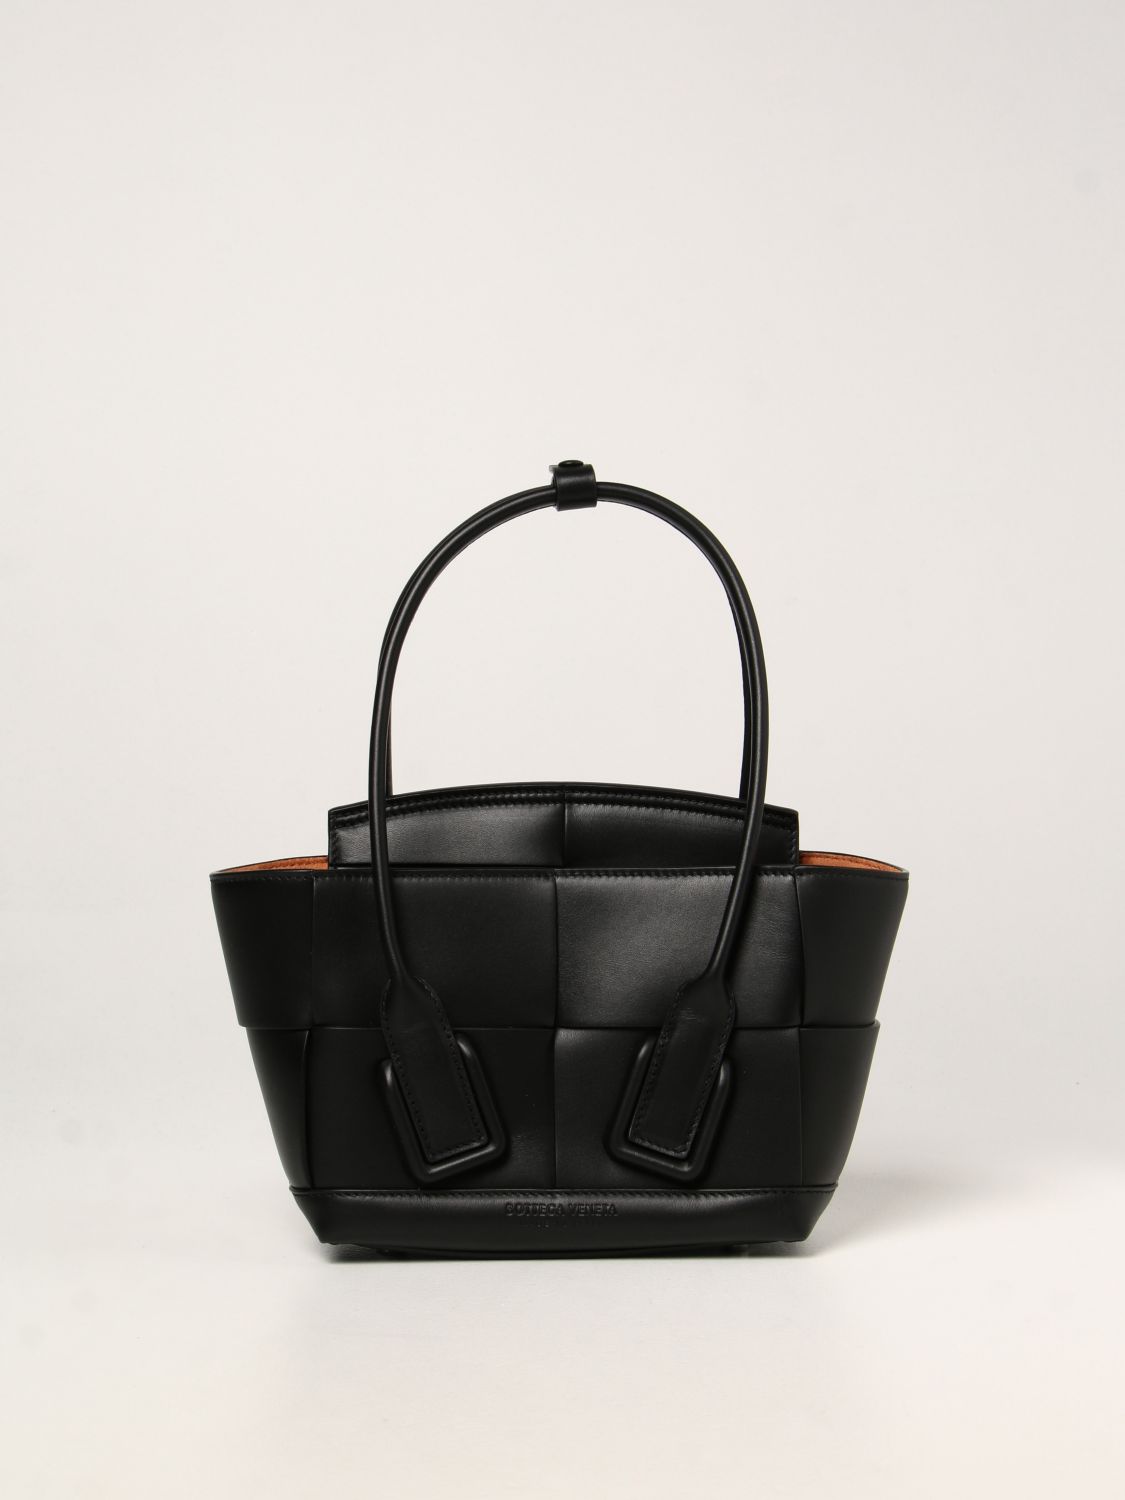 BOTTEGA VENETA: mini Arco bag in woven macro leather - Black | Bottega ...